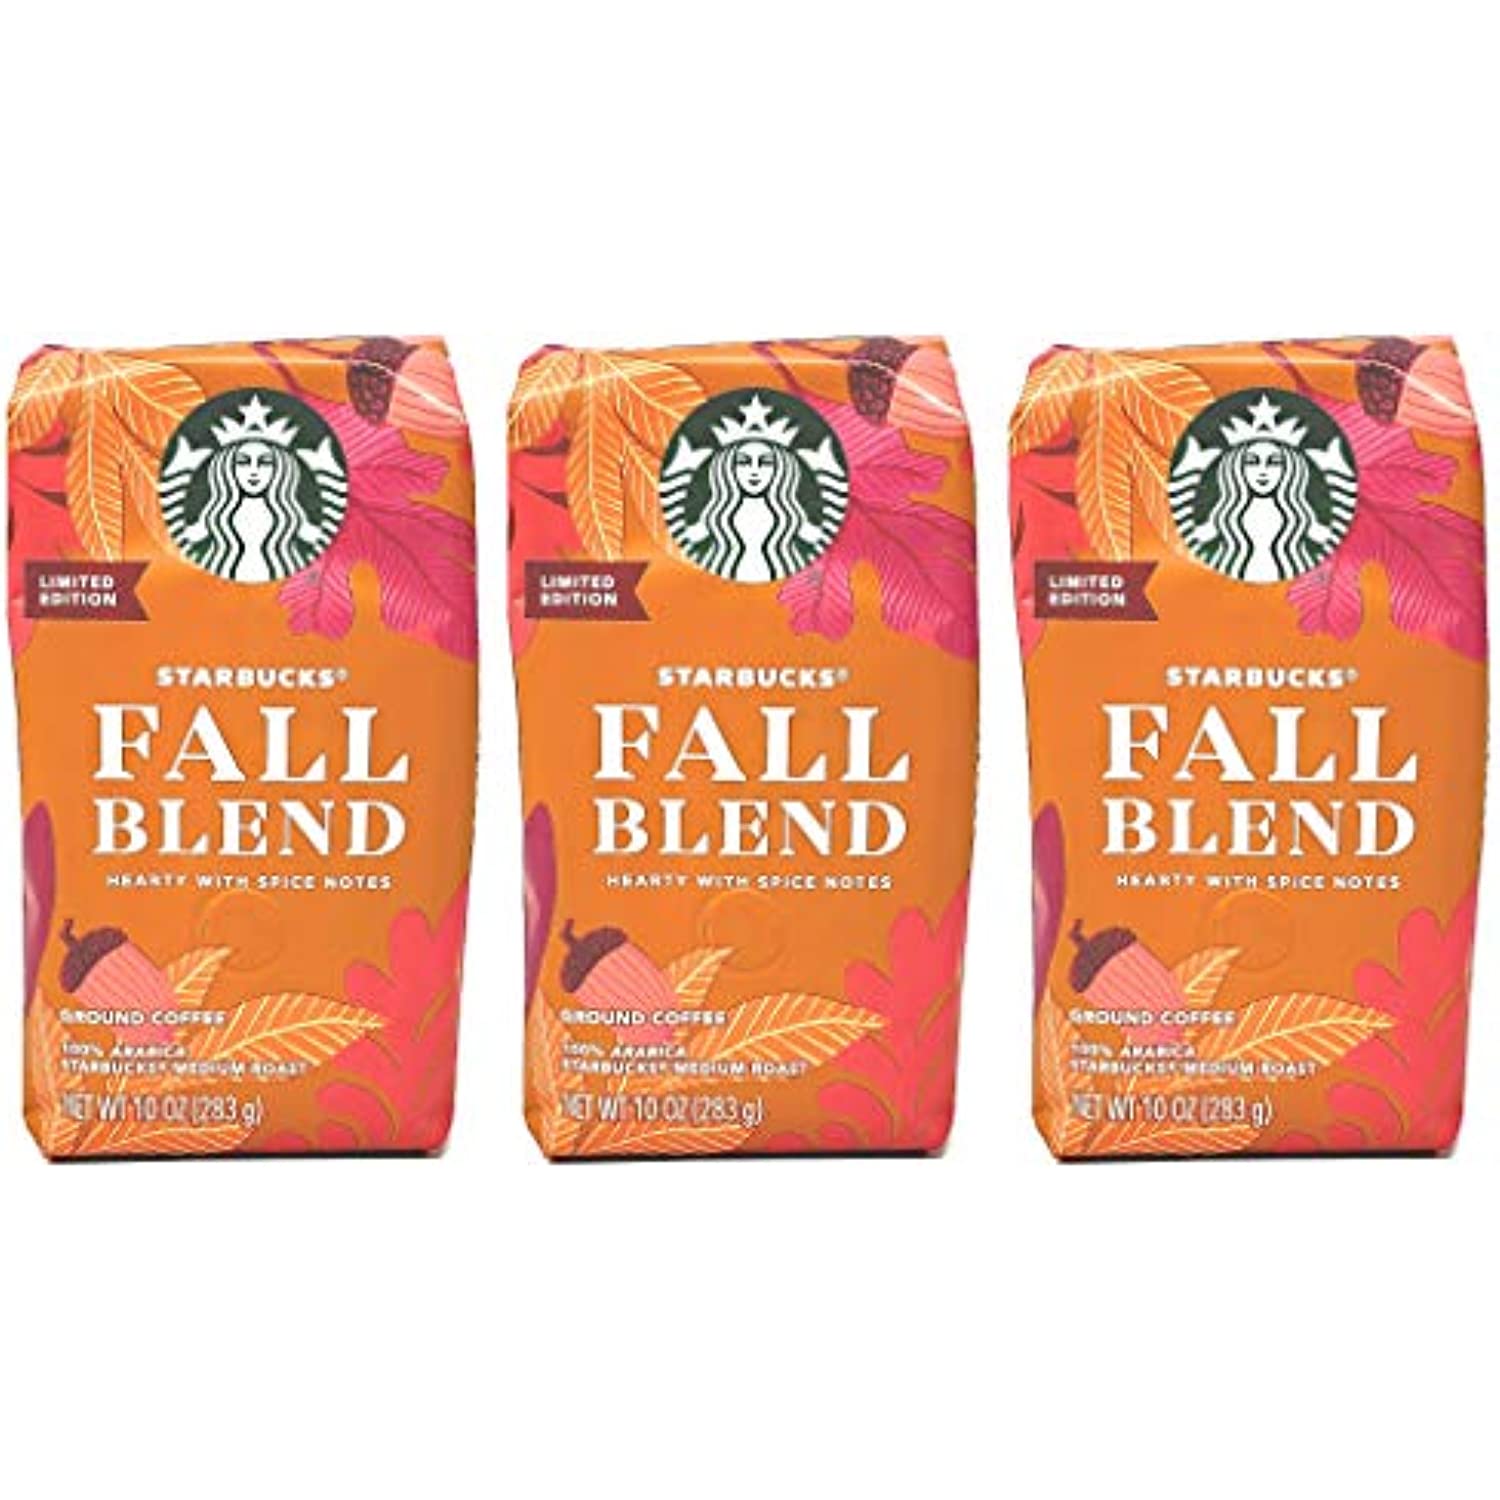 Starbucks Fall Blend Ground Coffee - Pack of 3 Bags - 10 oz Per Bag - 100% Arabica Starbuck's Medium Roast